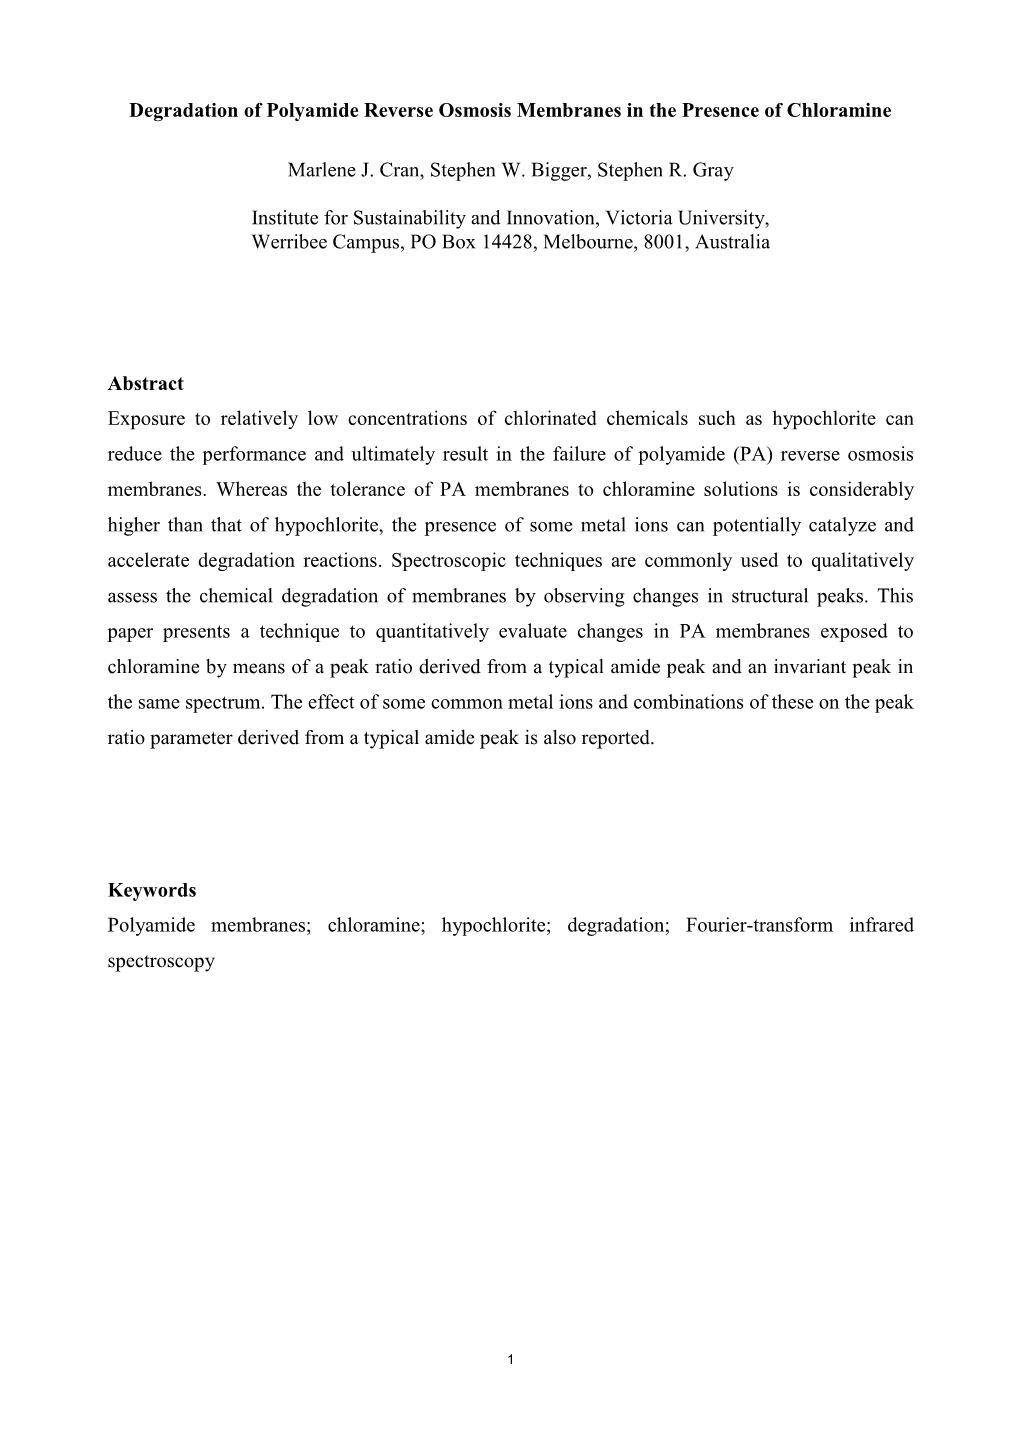 Kinetics of the Chloramine Degradation of Polyamide